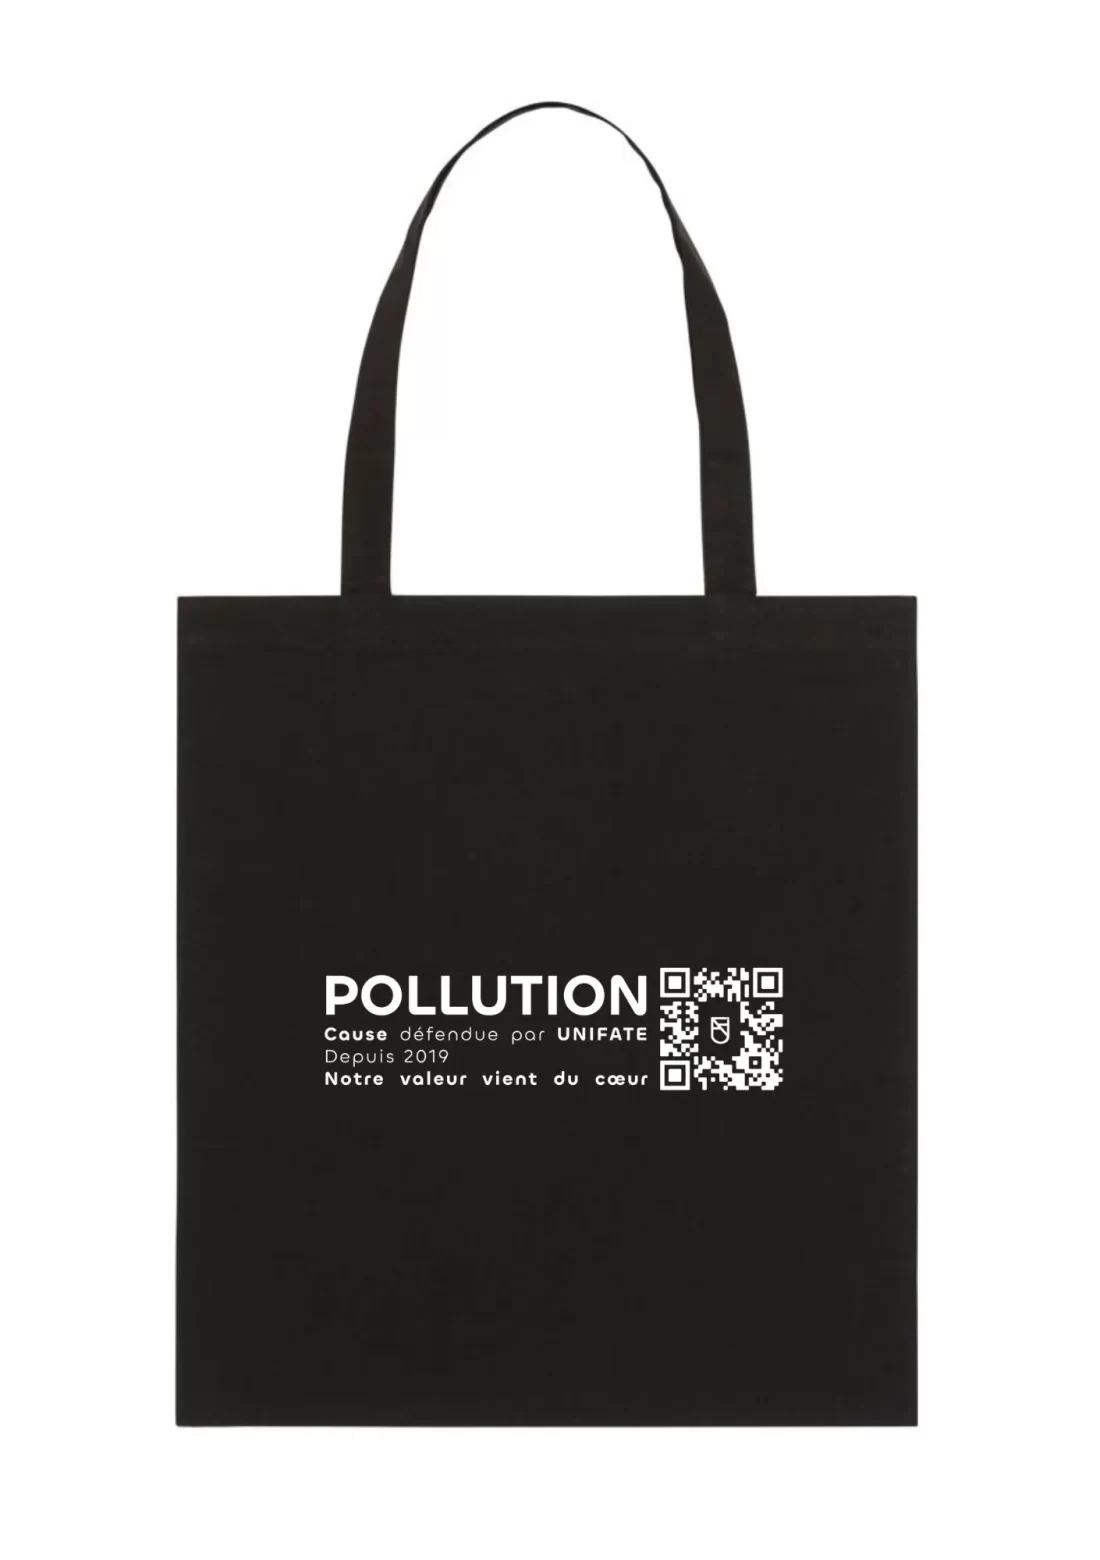 unifate-marque-responsable-rennes-collection-pollution-ete-tote-bag-noir-verso